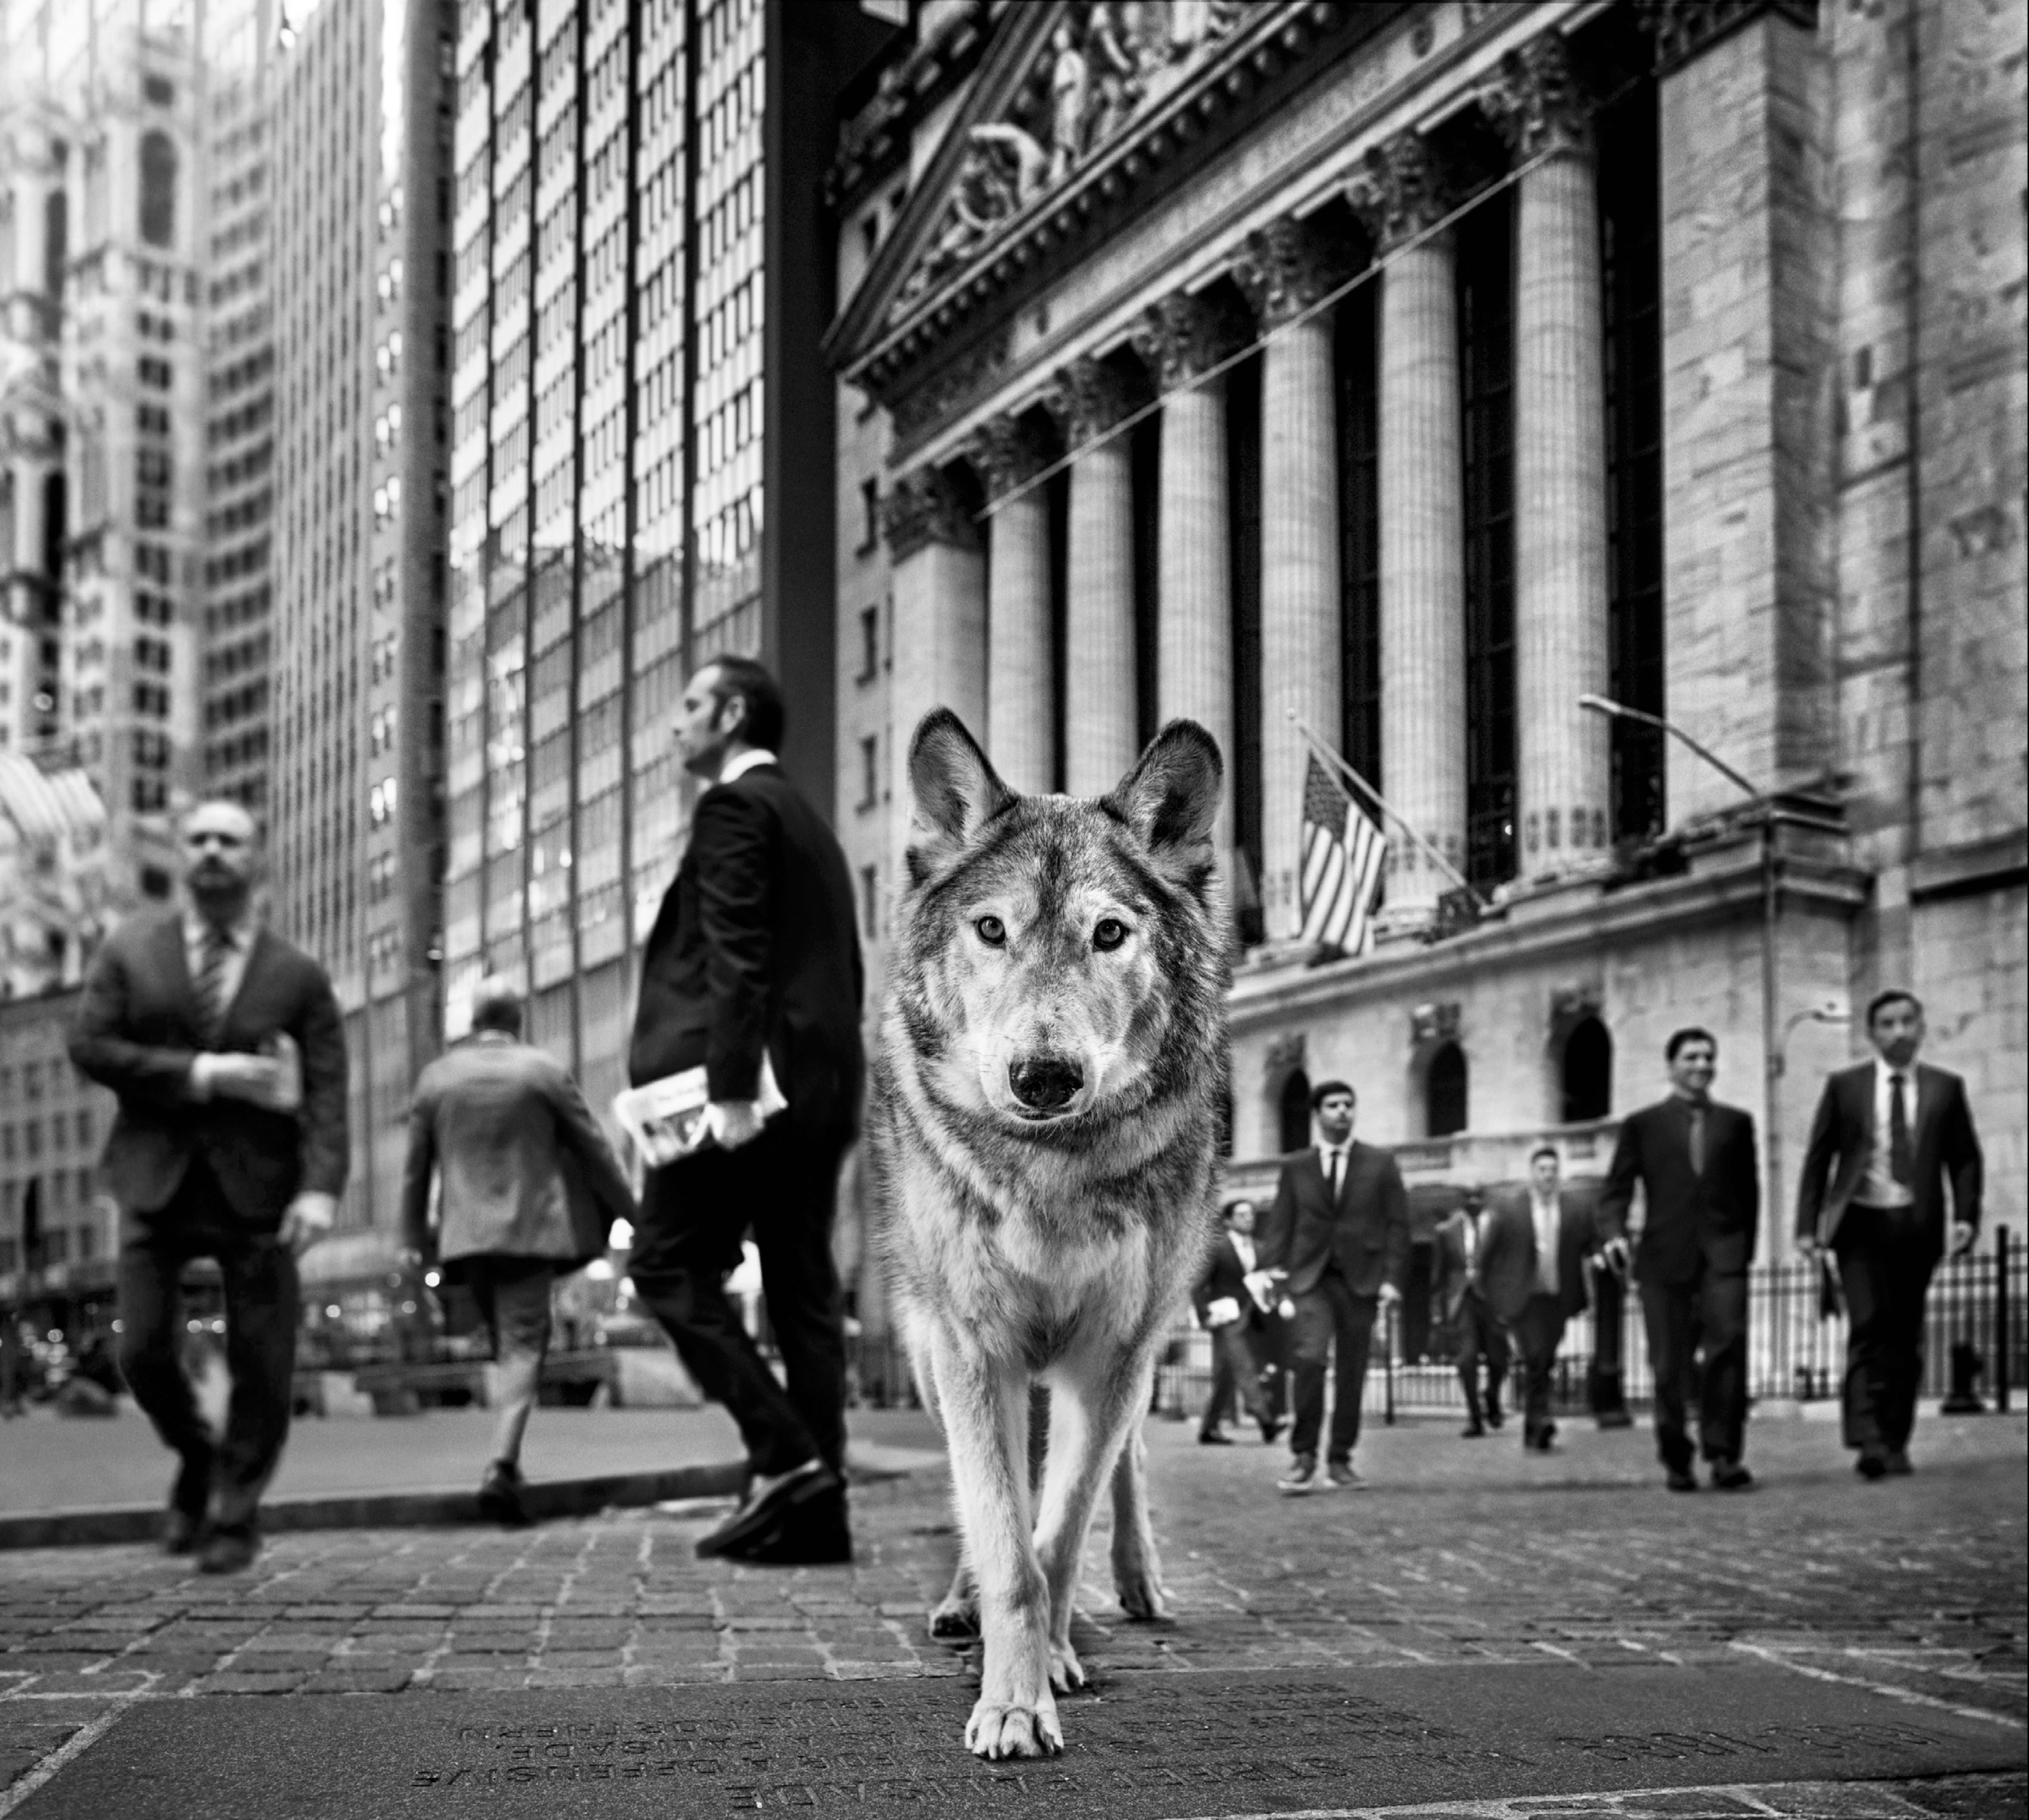 David Yarrow Black and White Photograph - Wall Street